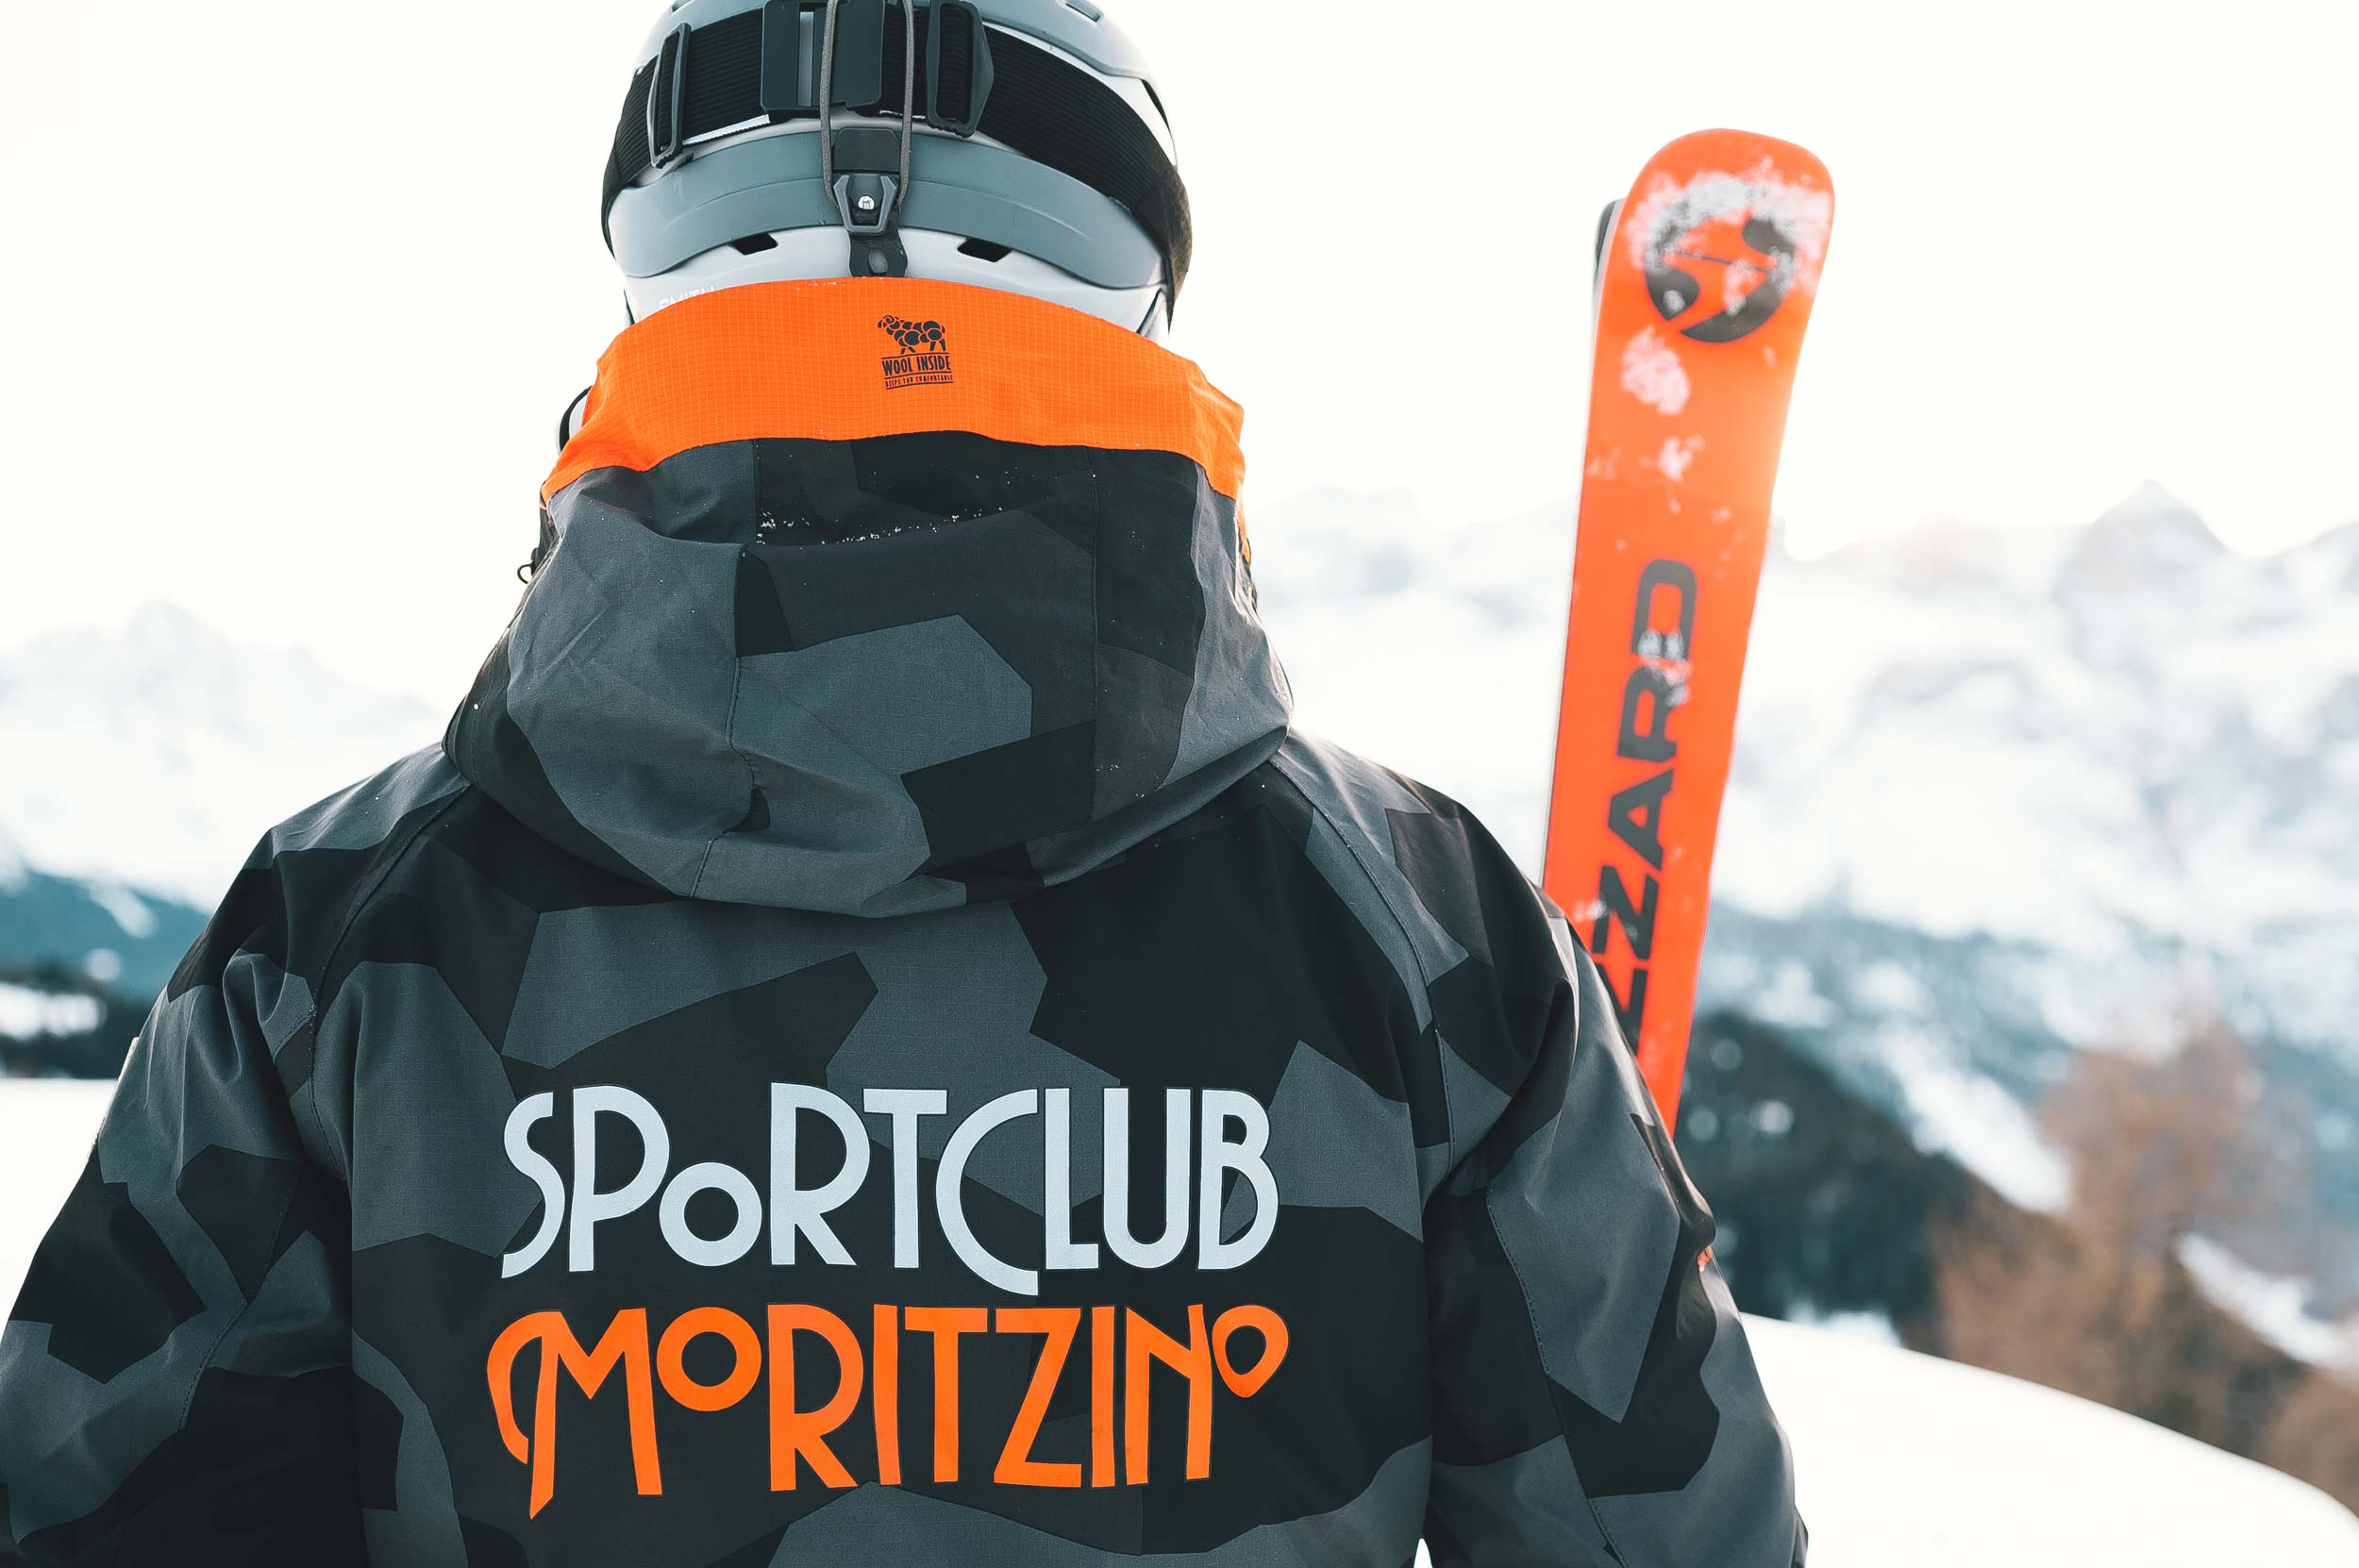 Sport club moritzino2